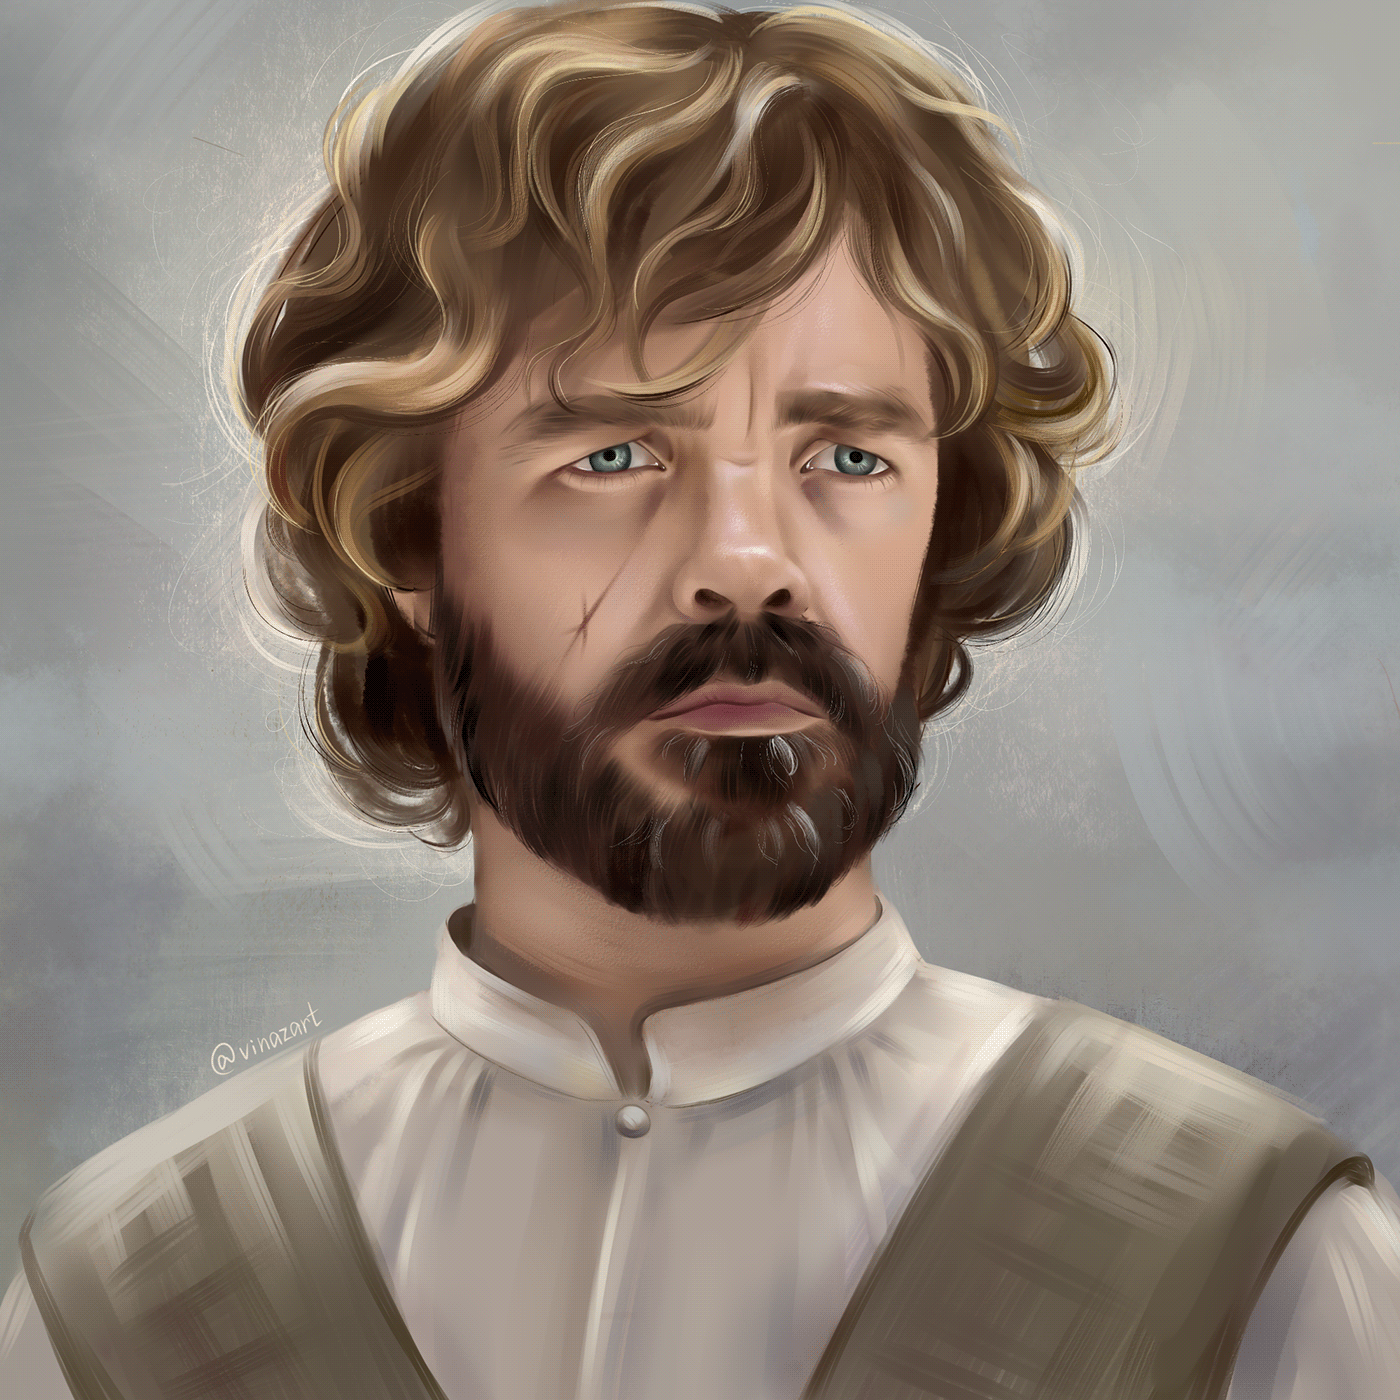 art Digital Art  Drawing  face Game of Thrones ILLUSTRATION  man portrait tyrion tyrion lannister